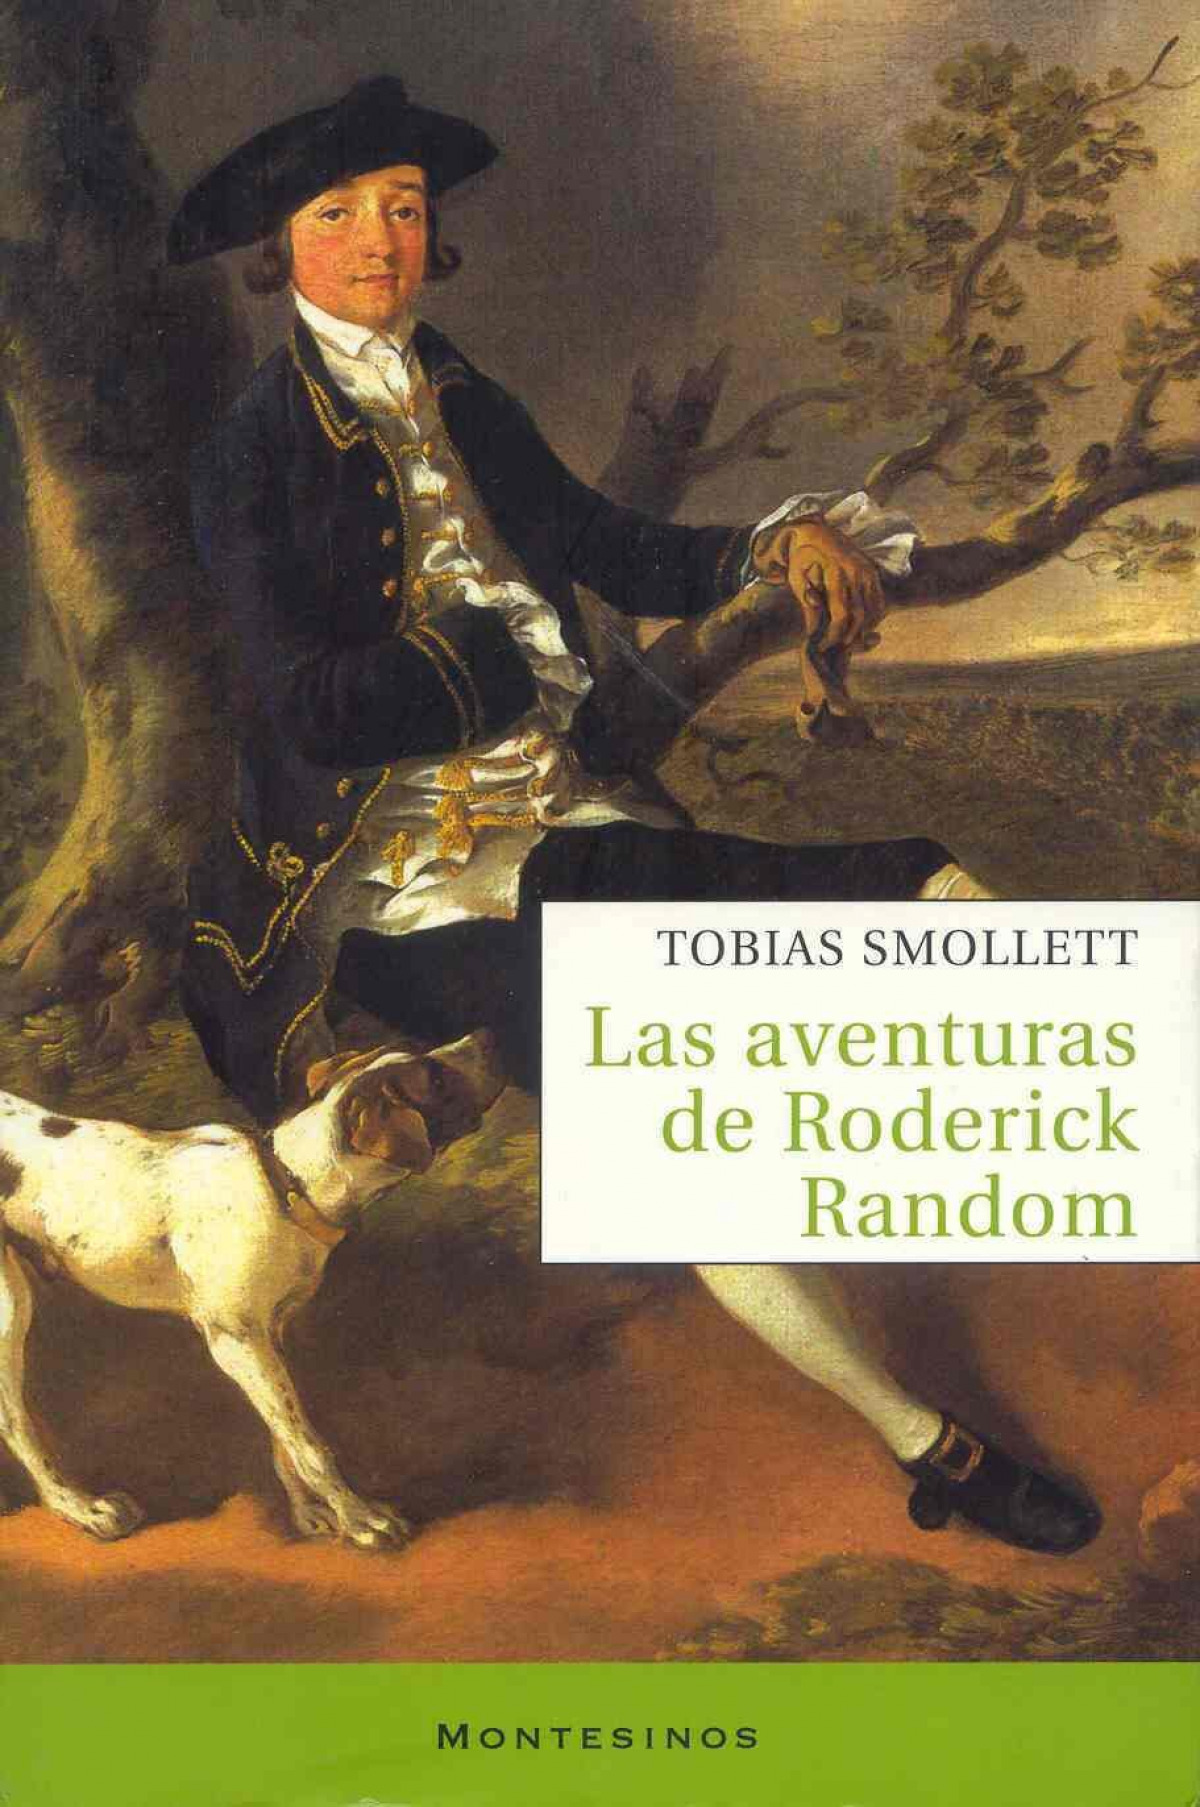 Las aventuras de roderich random - Smollett, Tobias